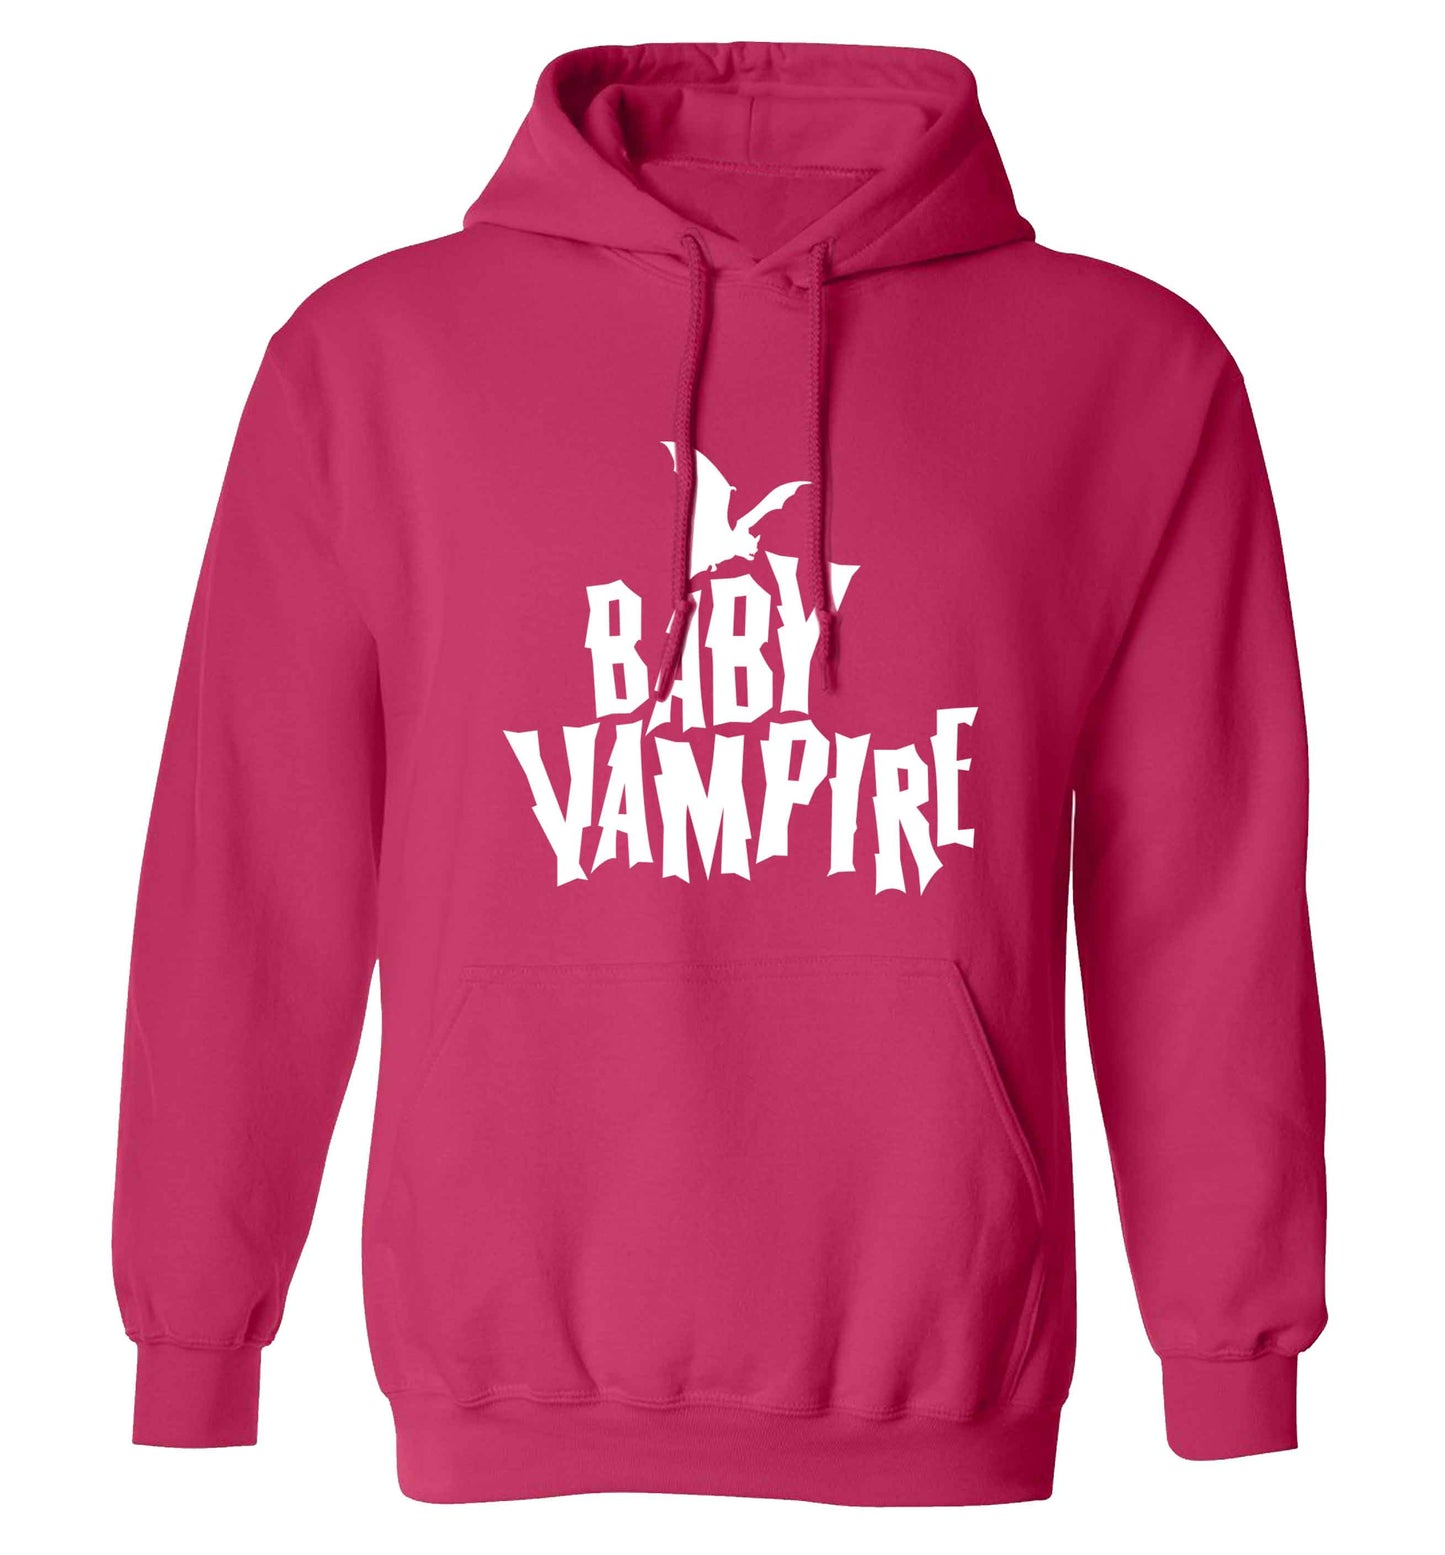 Baby vampire adults unisex pink hoodie 2XL